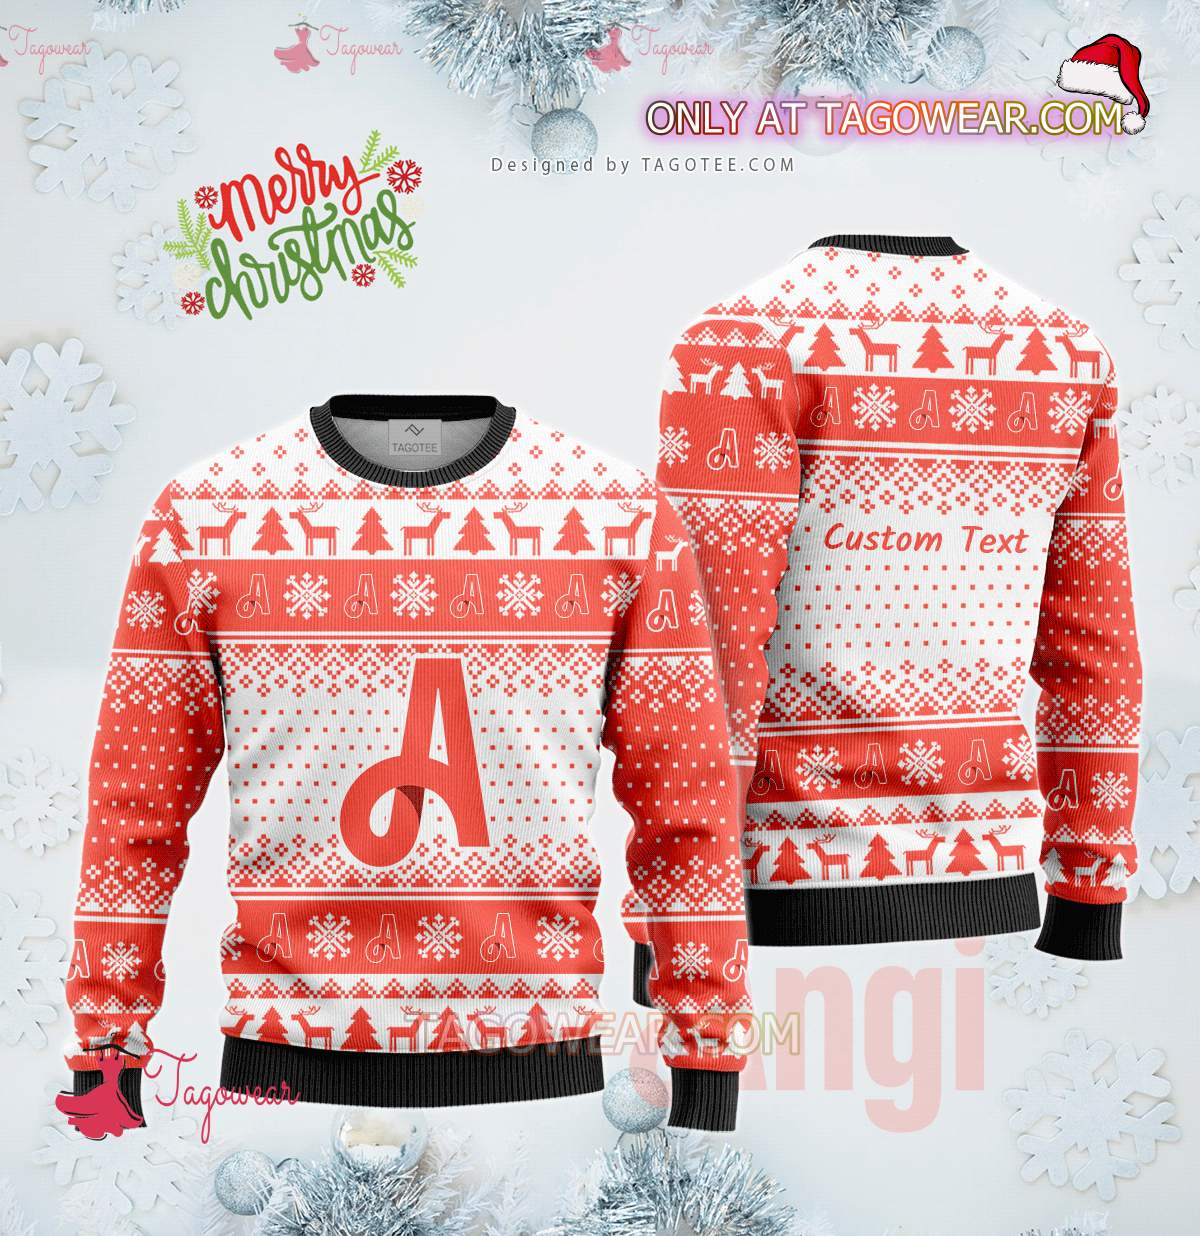 ANGI Homeservices Inc. Ugly Christmas Sweater